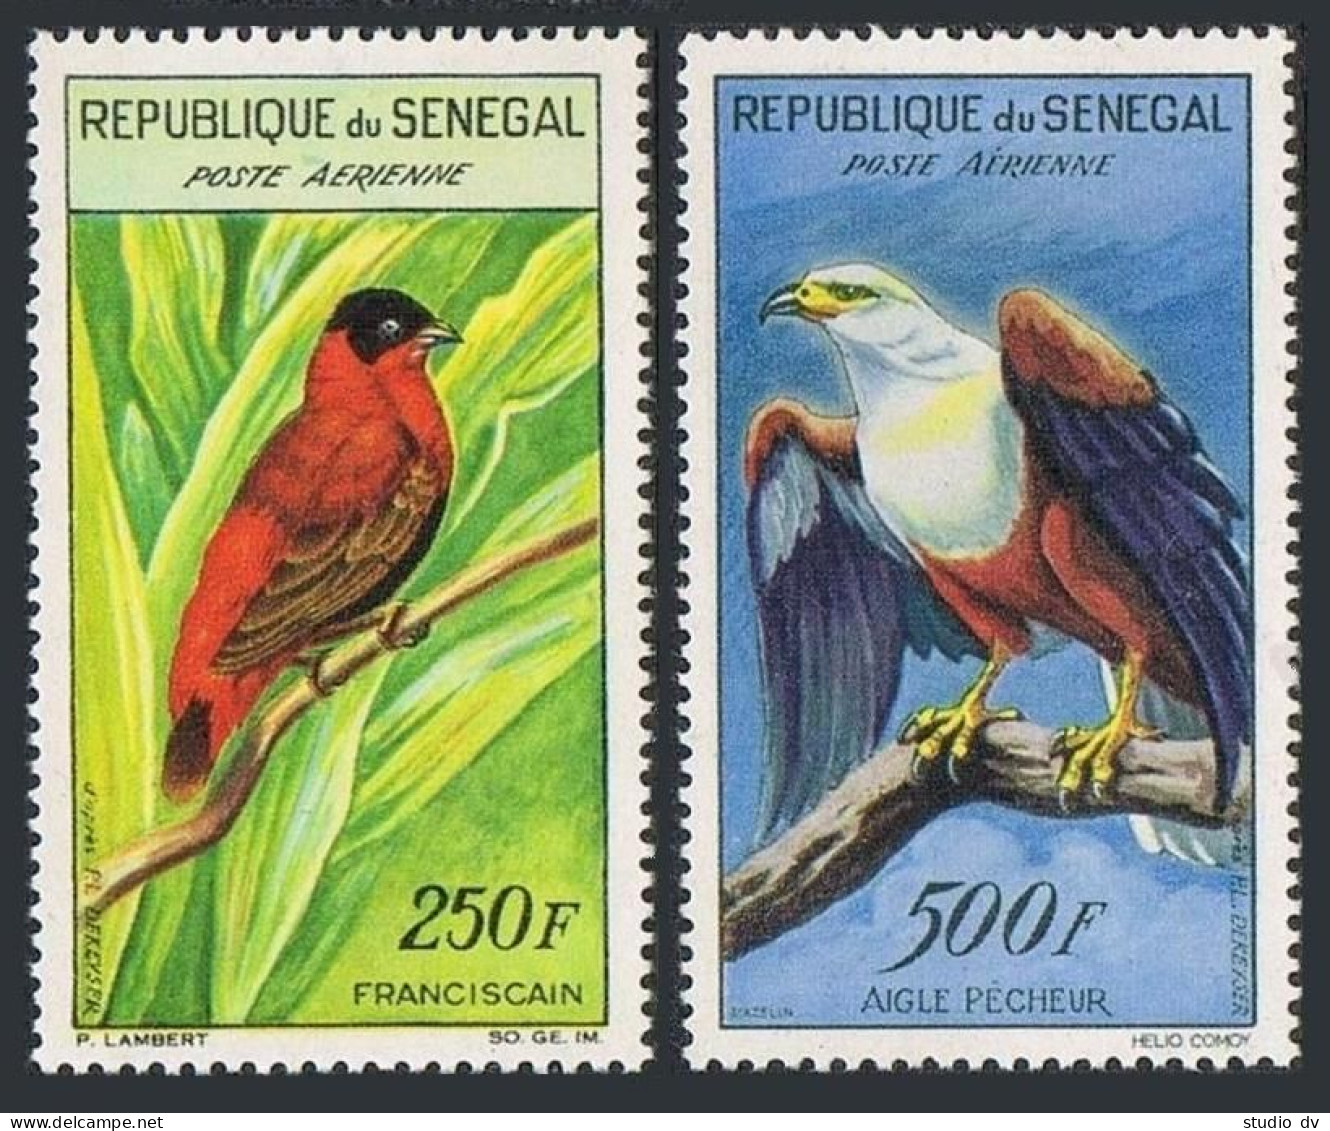 Senegal C29-C30,lightly Hinged.Michel 242-243. Red Bishop,Fish Eagle,1960-1963. - Sénégal (1960-...)